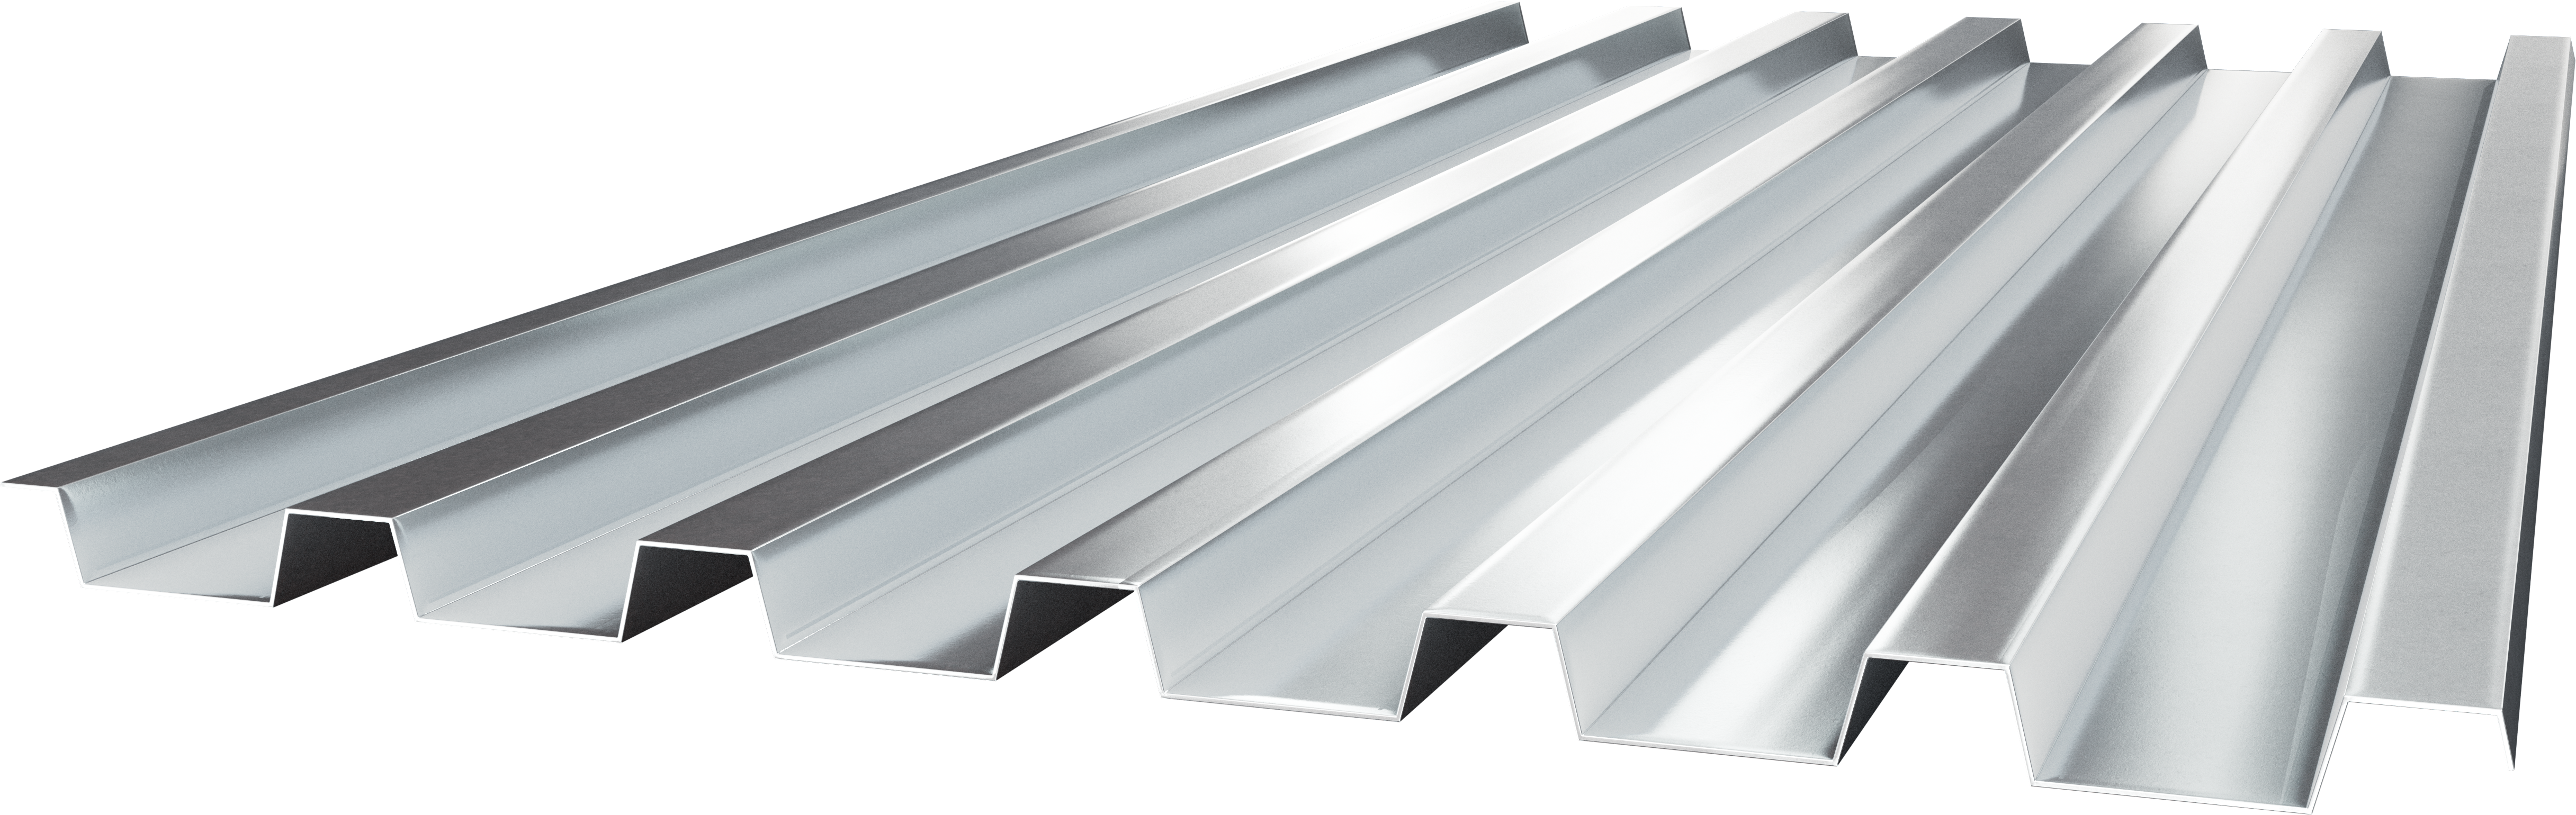 1.5 Metal Form Deck | Corrugated Metal Deck | Cordeck